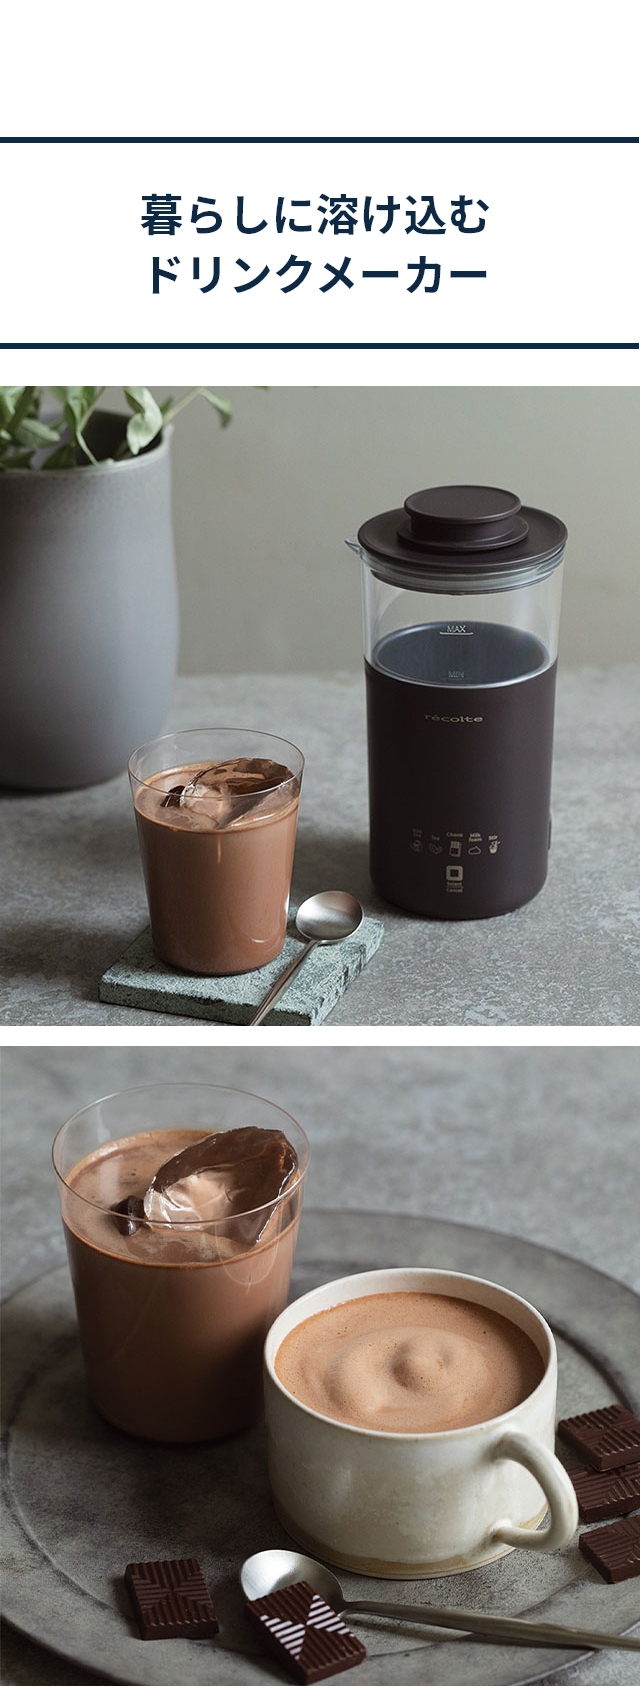 recolte (レコルト) チョコレートドリンクメーカー (Chocolate Drink Maker) RMT-2